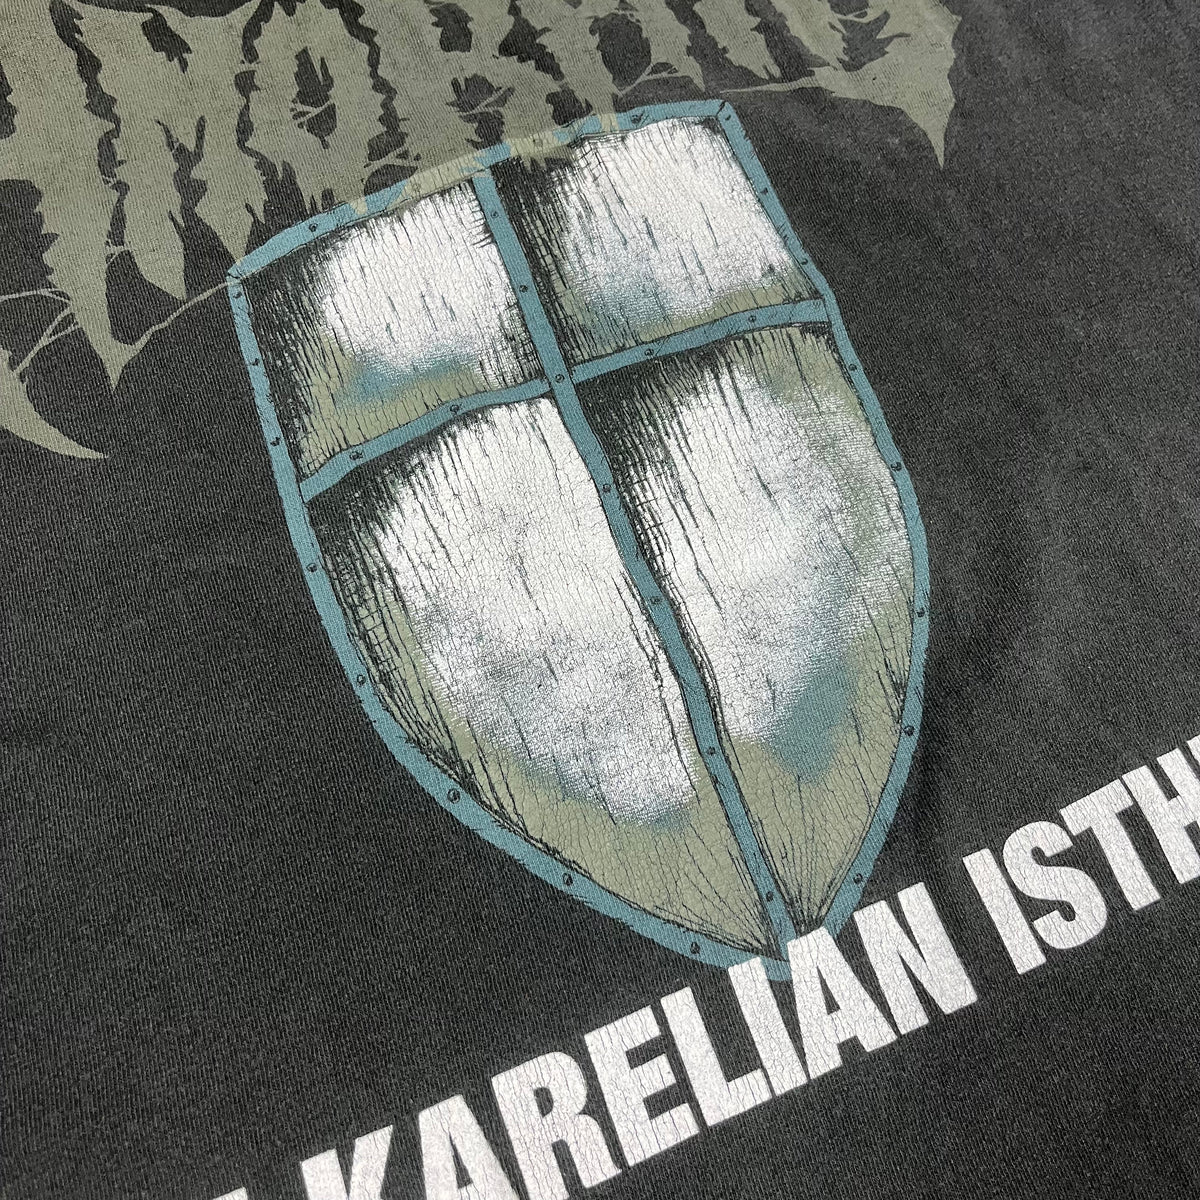 Vintage Amorphis &quot;The Karelian Isthmus&quot; Relapse Promotional T-Shirt